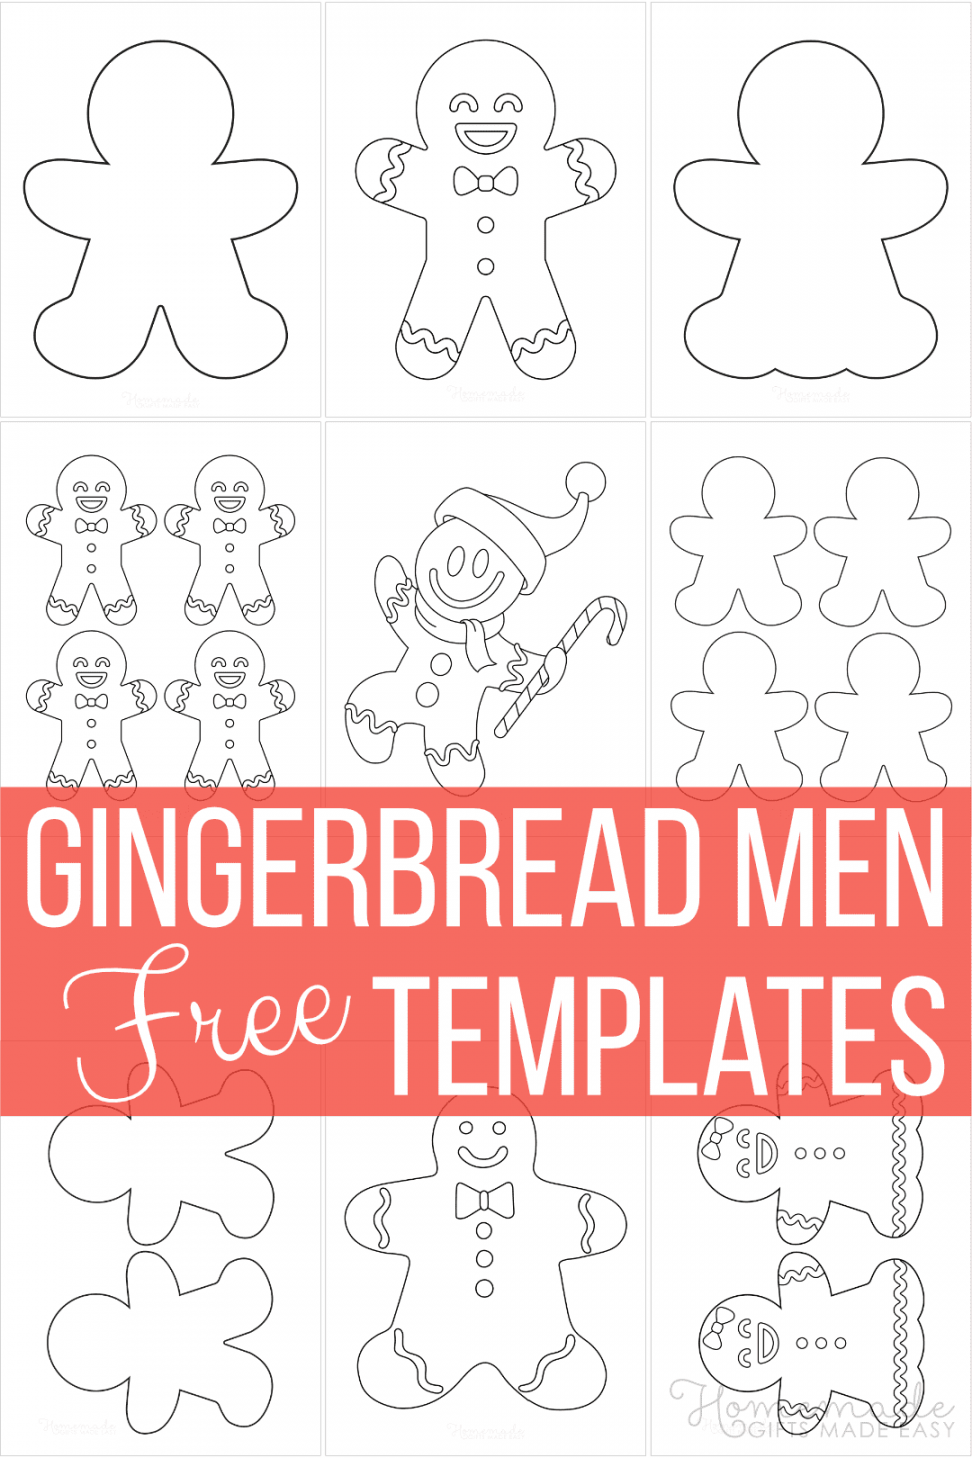 Free Printable Gingerbread Man Templates & Coloring Pages - FREE Printables - Gingerbread Man Free Printables